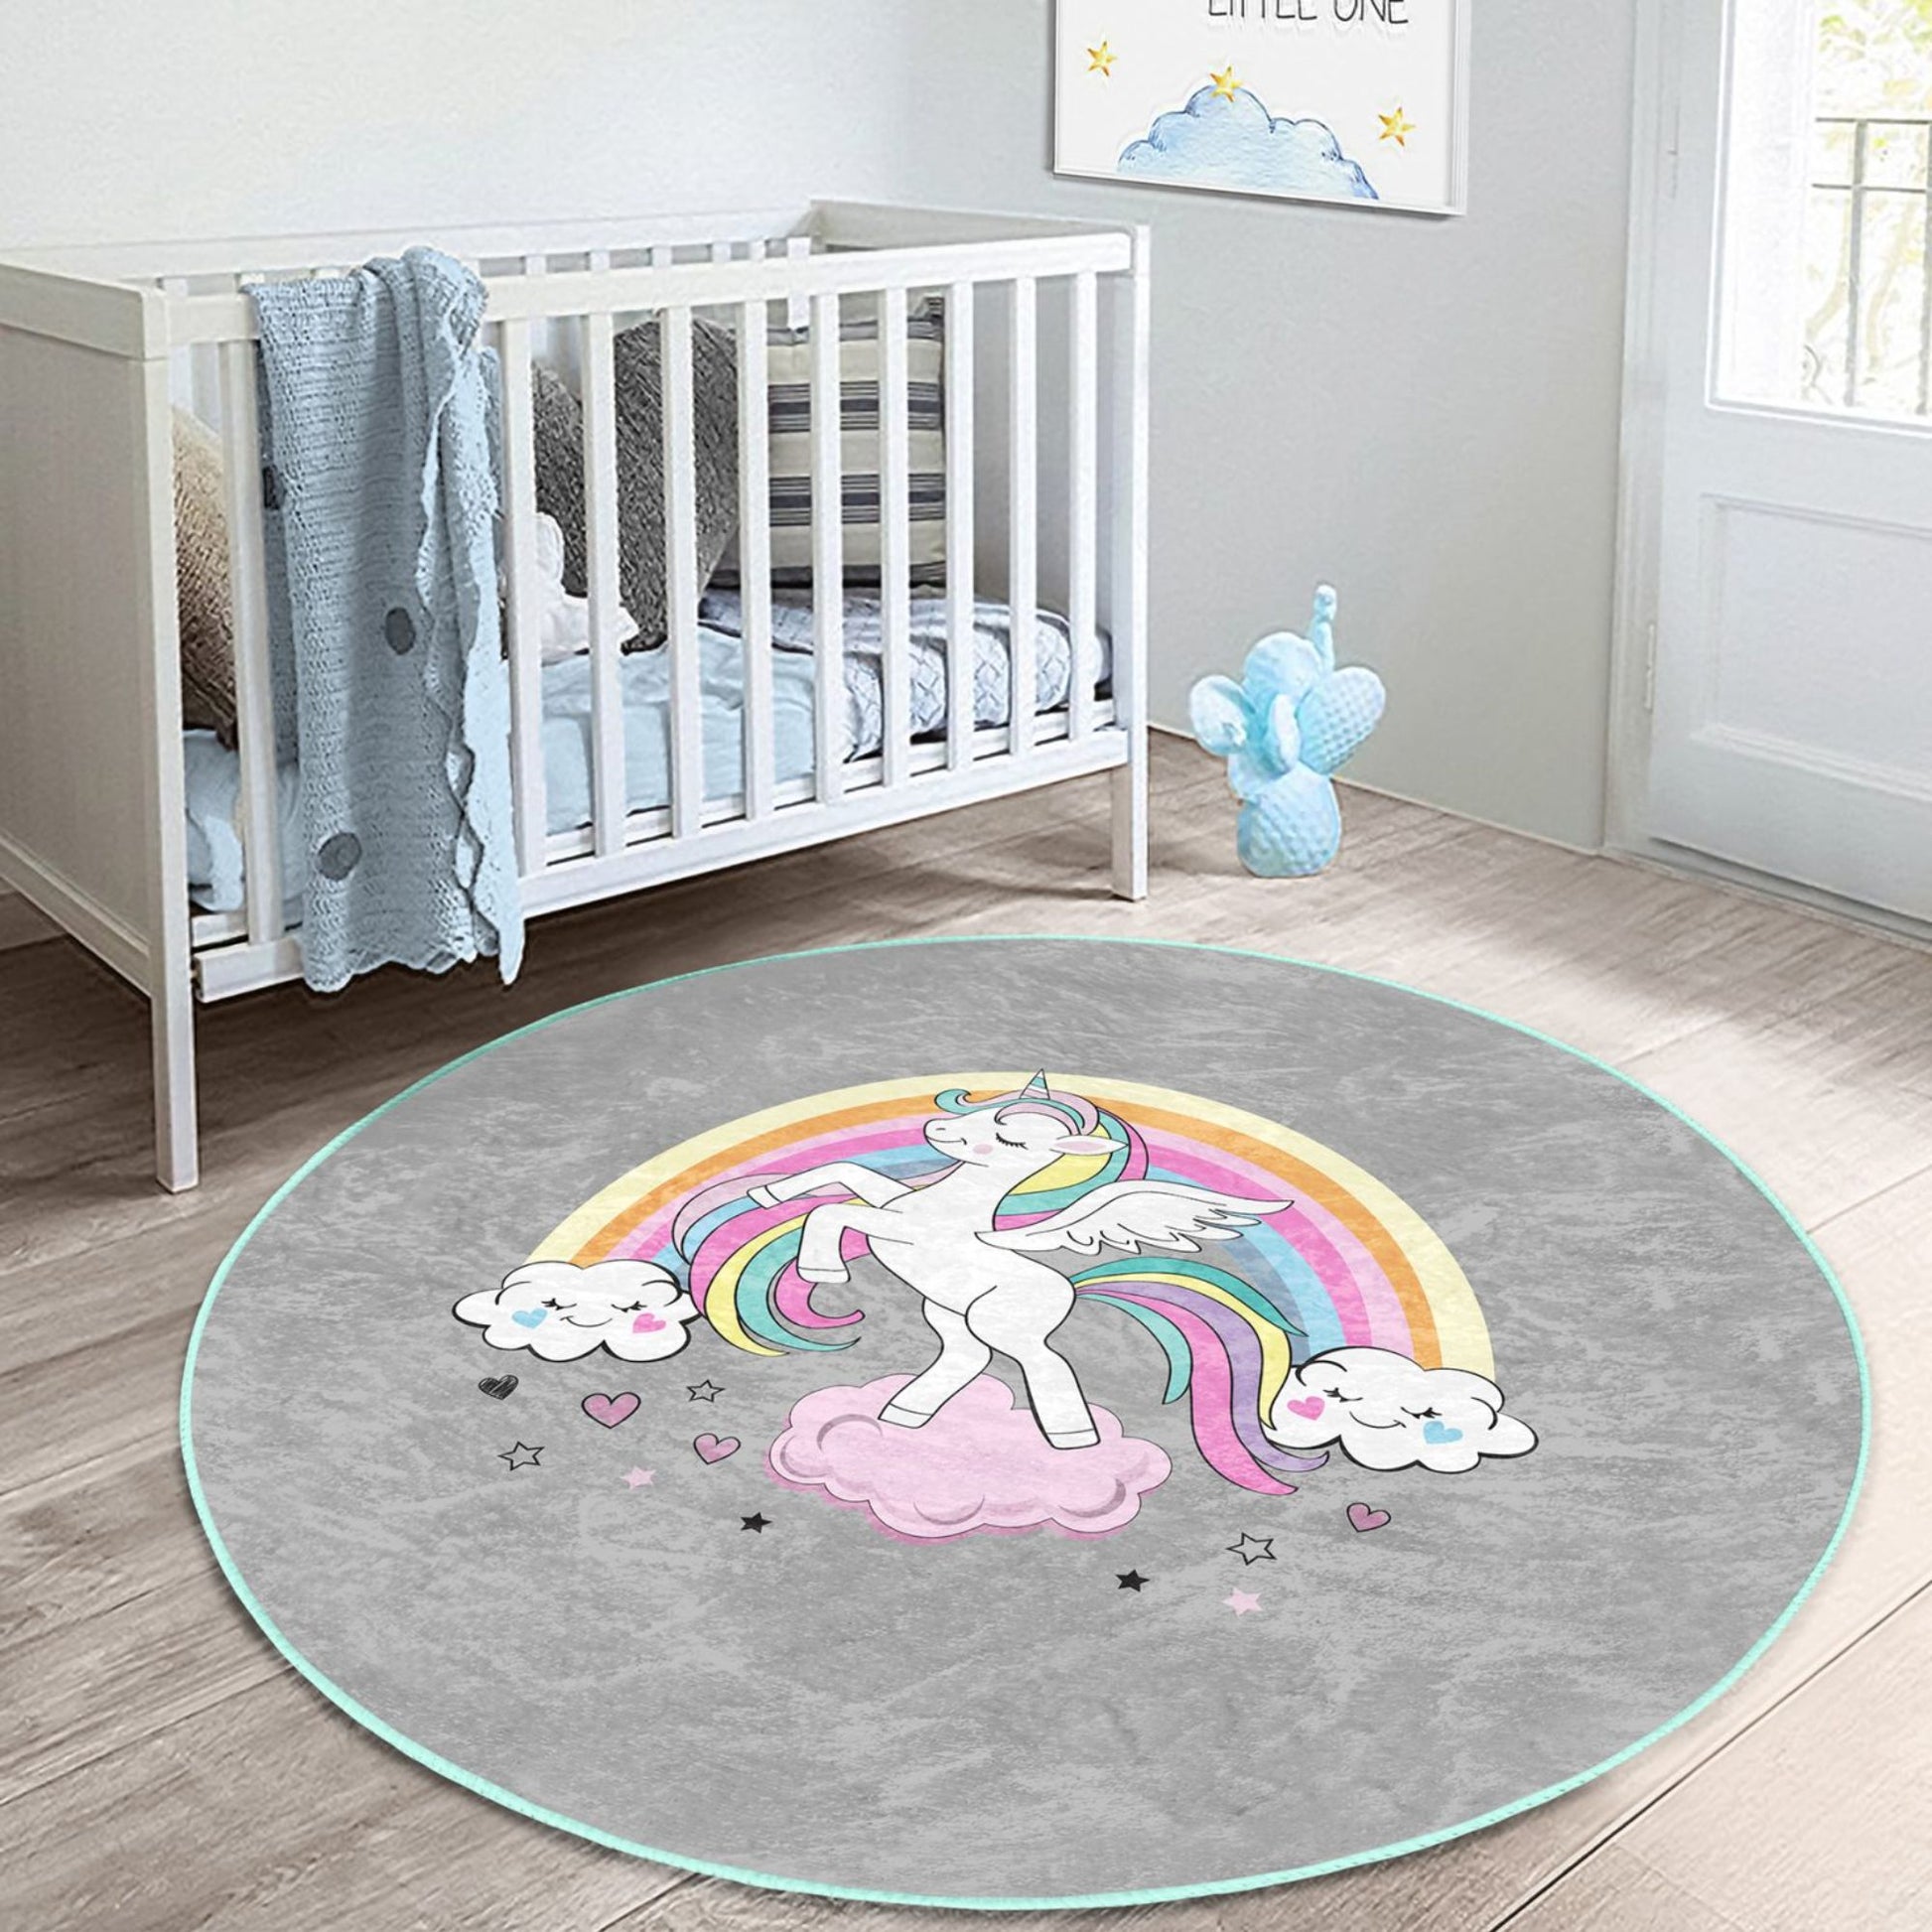 Homeezone's Beautiful Unicorn with Rainbows Kids Room Rug